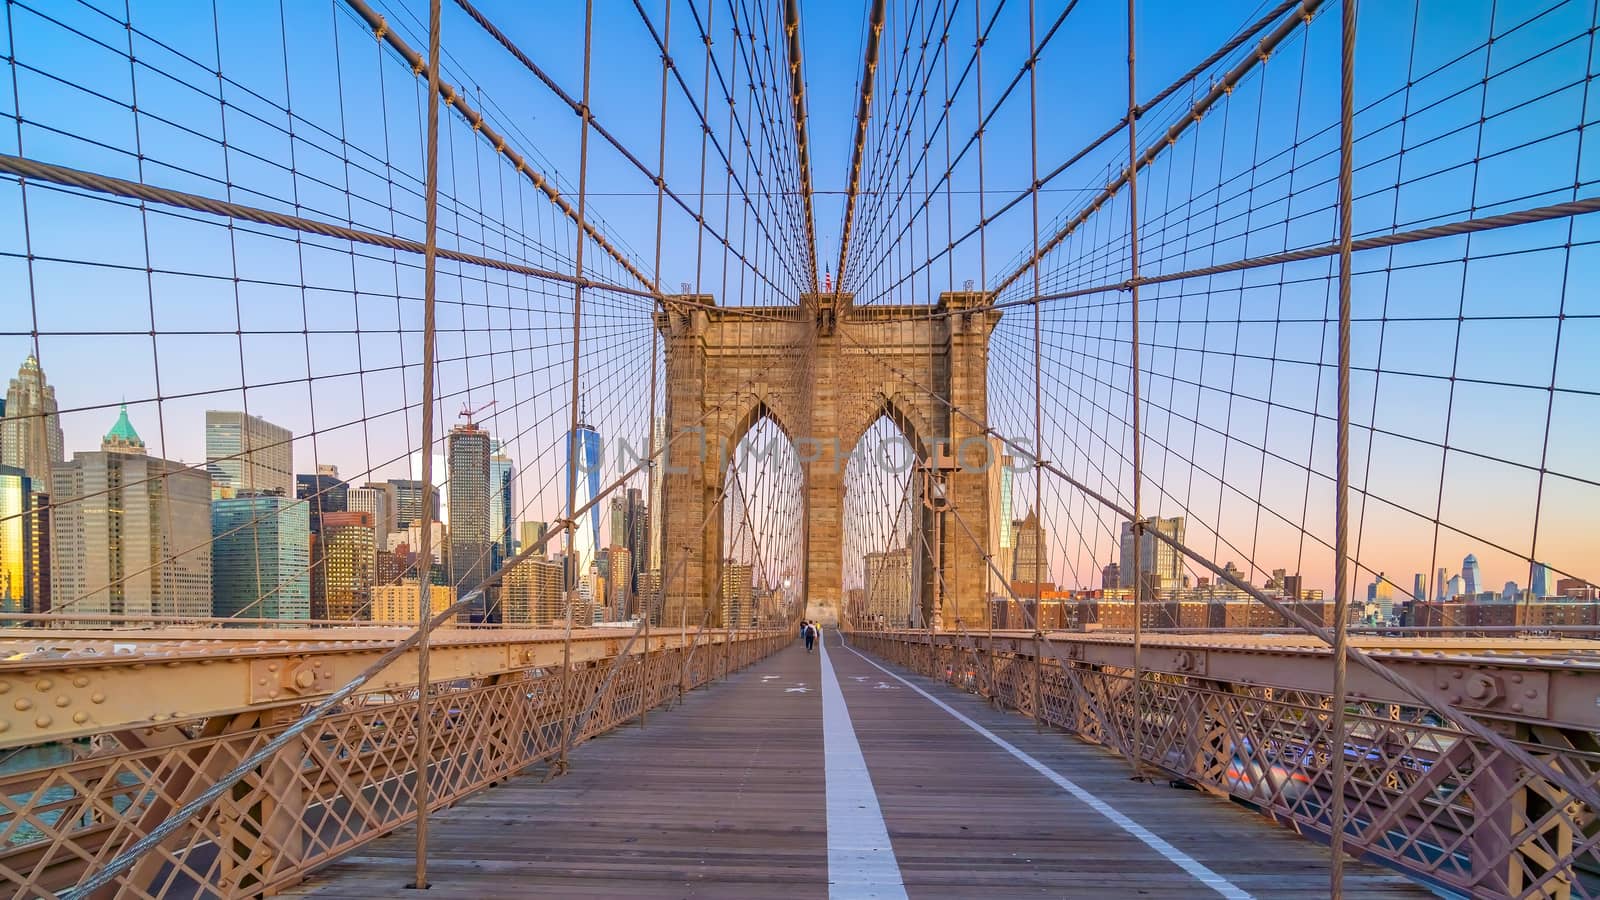 Brooklyn Bridge in New York City, USA by f11photo